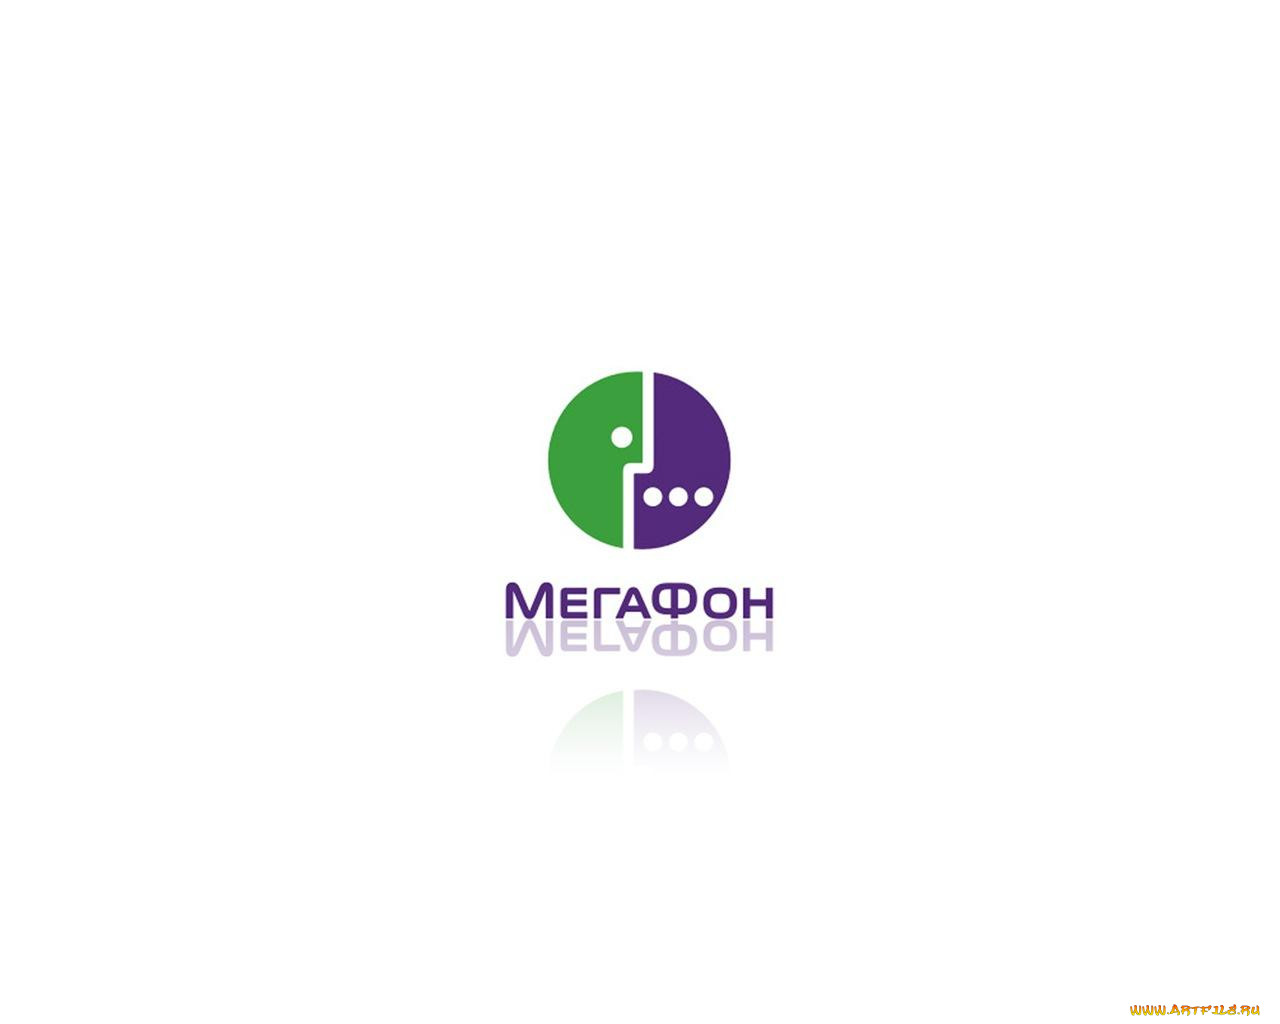 Значок мегафон на экран. МЕГАФОН. Символ МЕГАФОНА. МЕГАФОН фото. Логотип МЕГАФОН картинки.